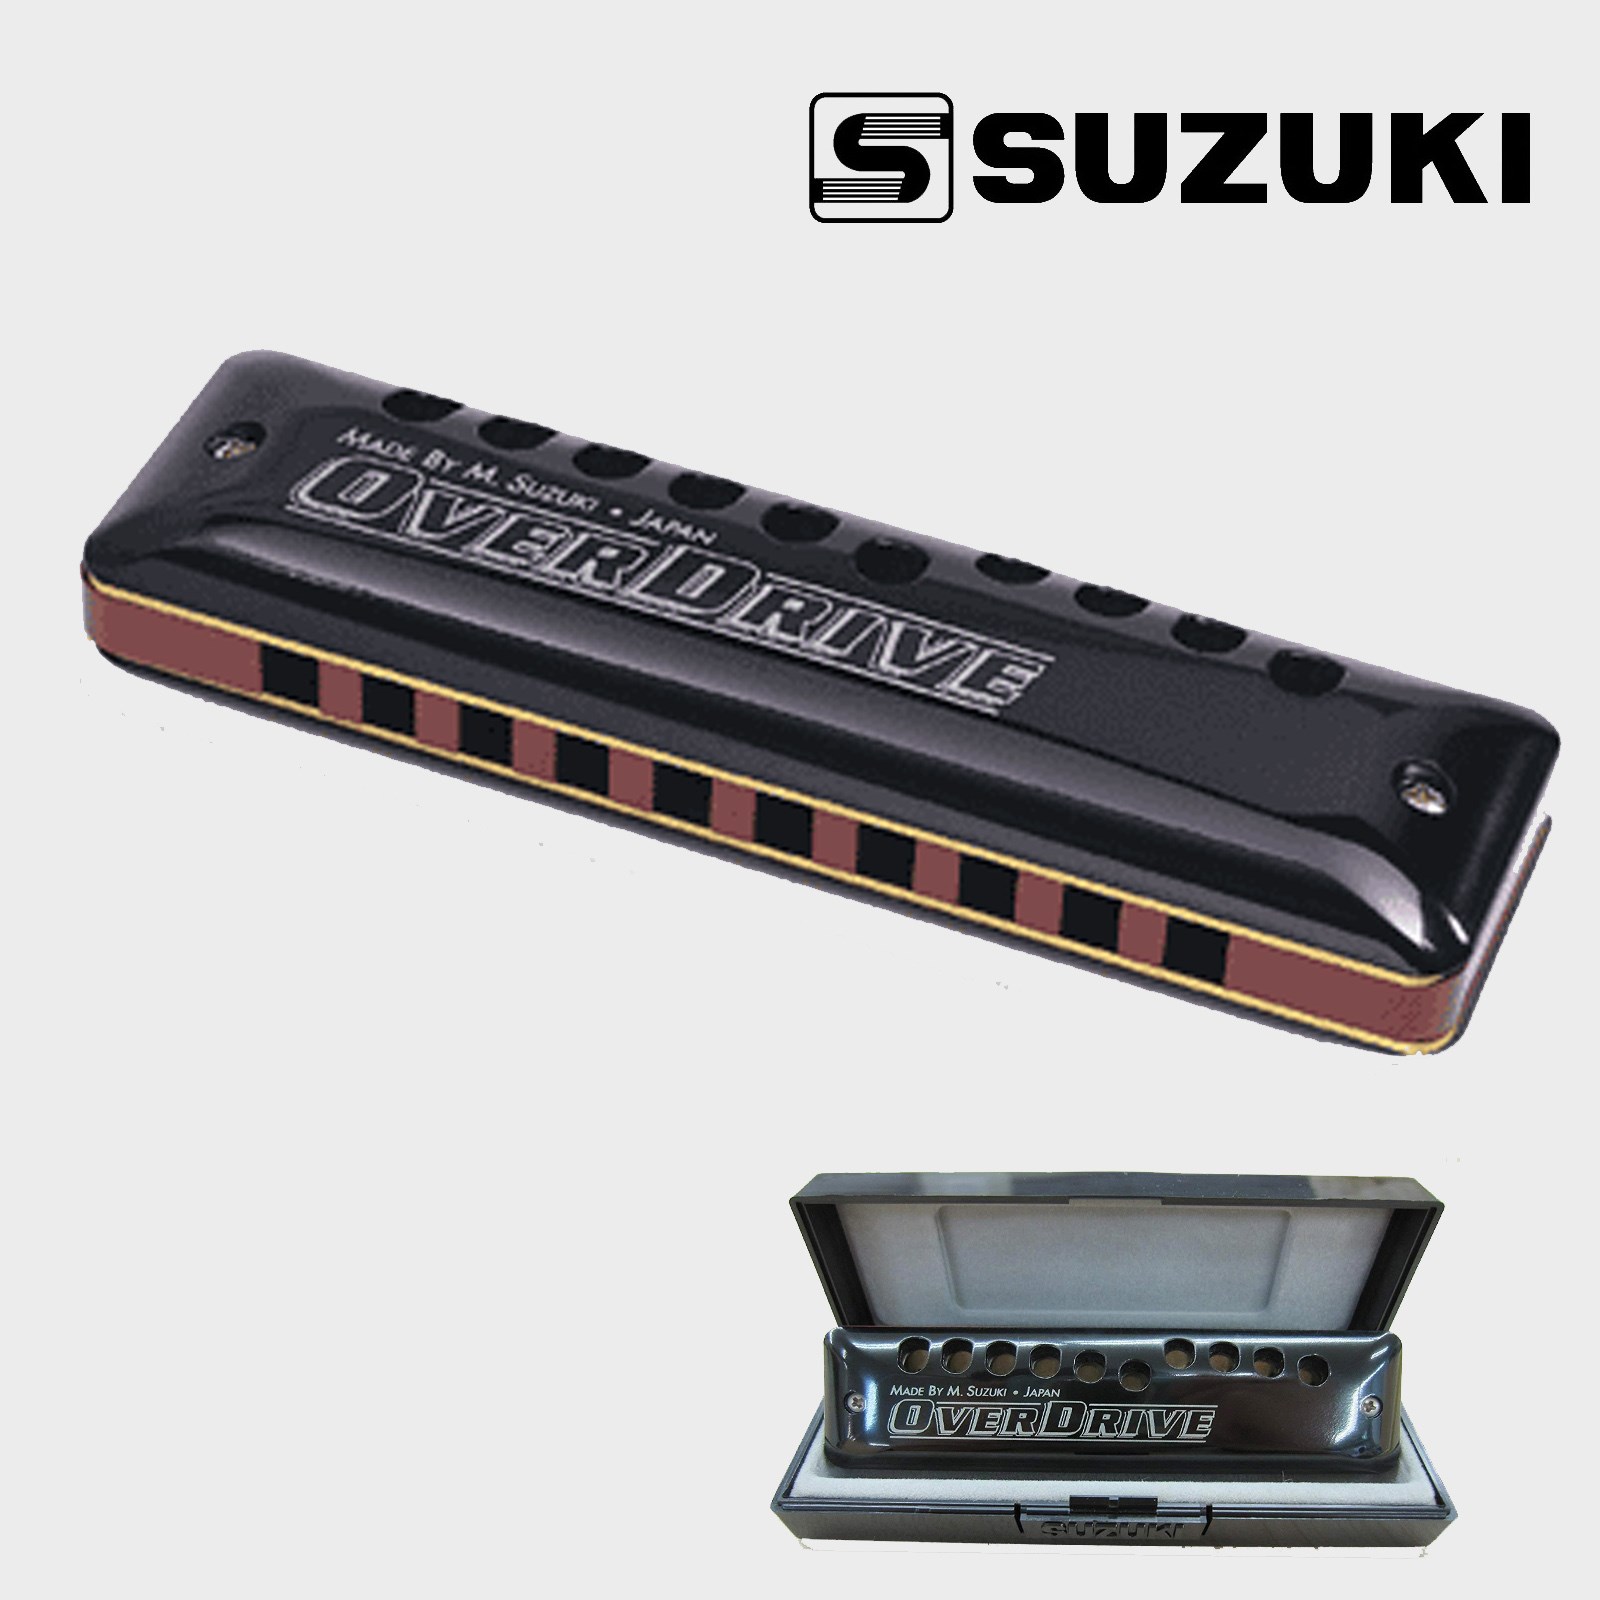 Suzuki Overdrive key of D